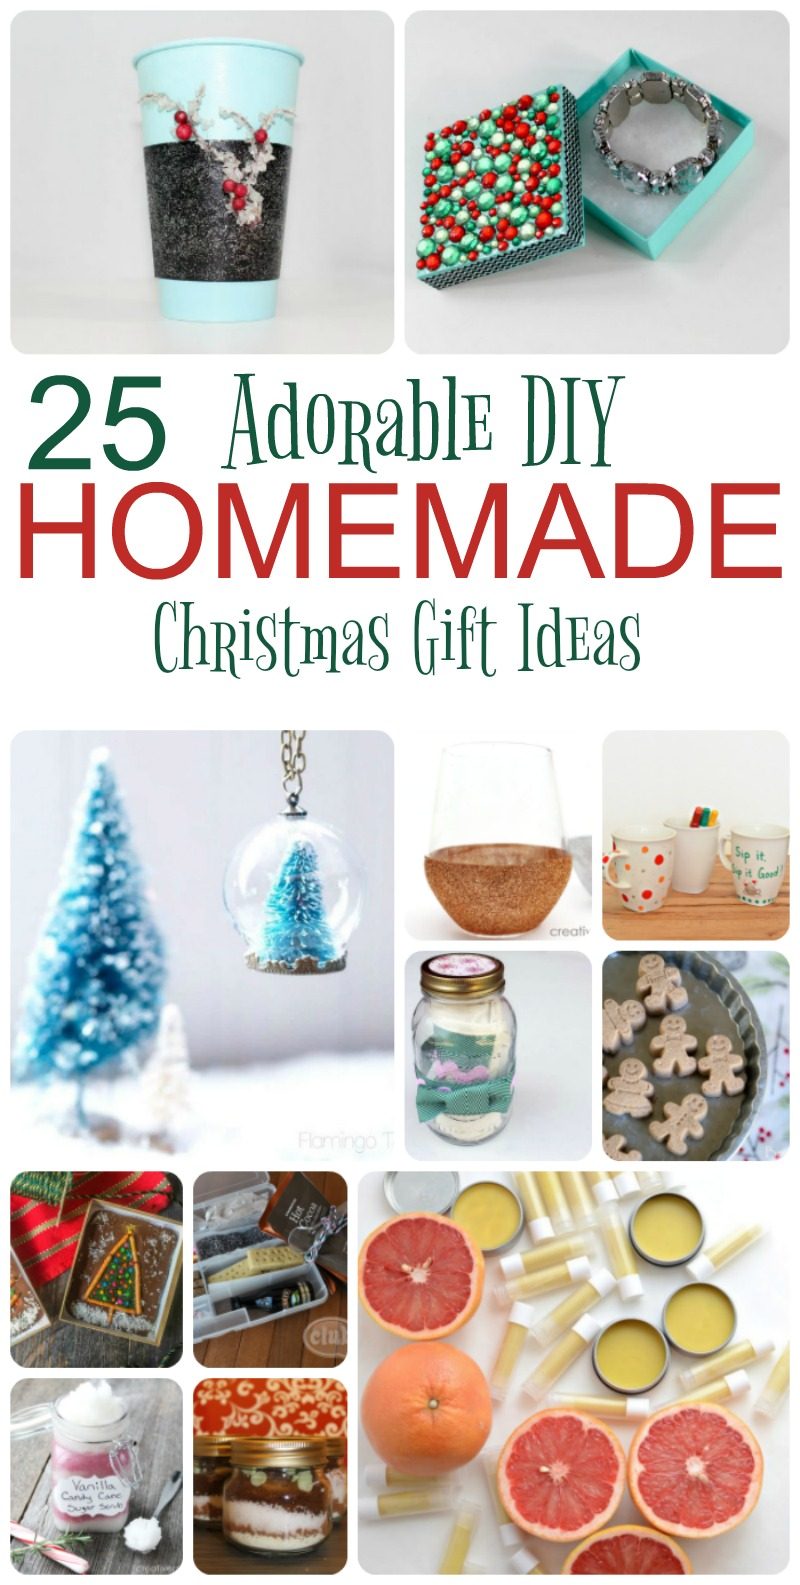 25 Adorable Homemade Gifts To Make For Christmas - Pretty Opinionated